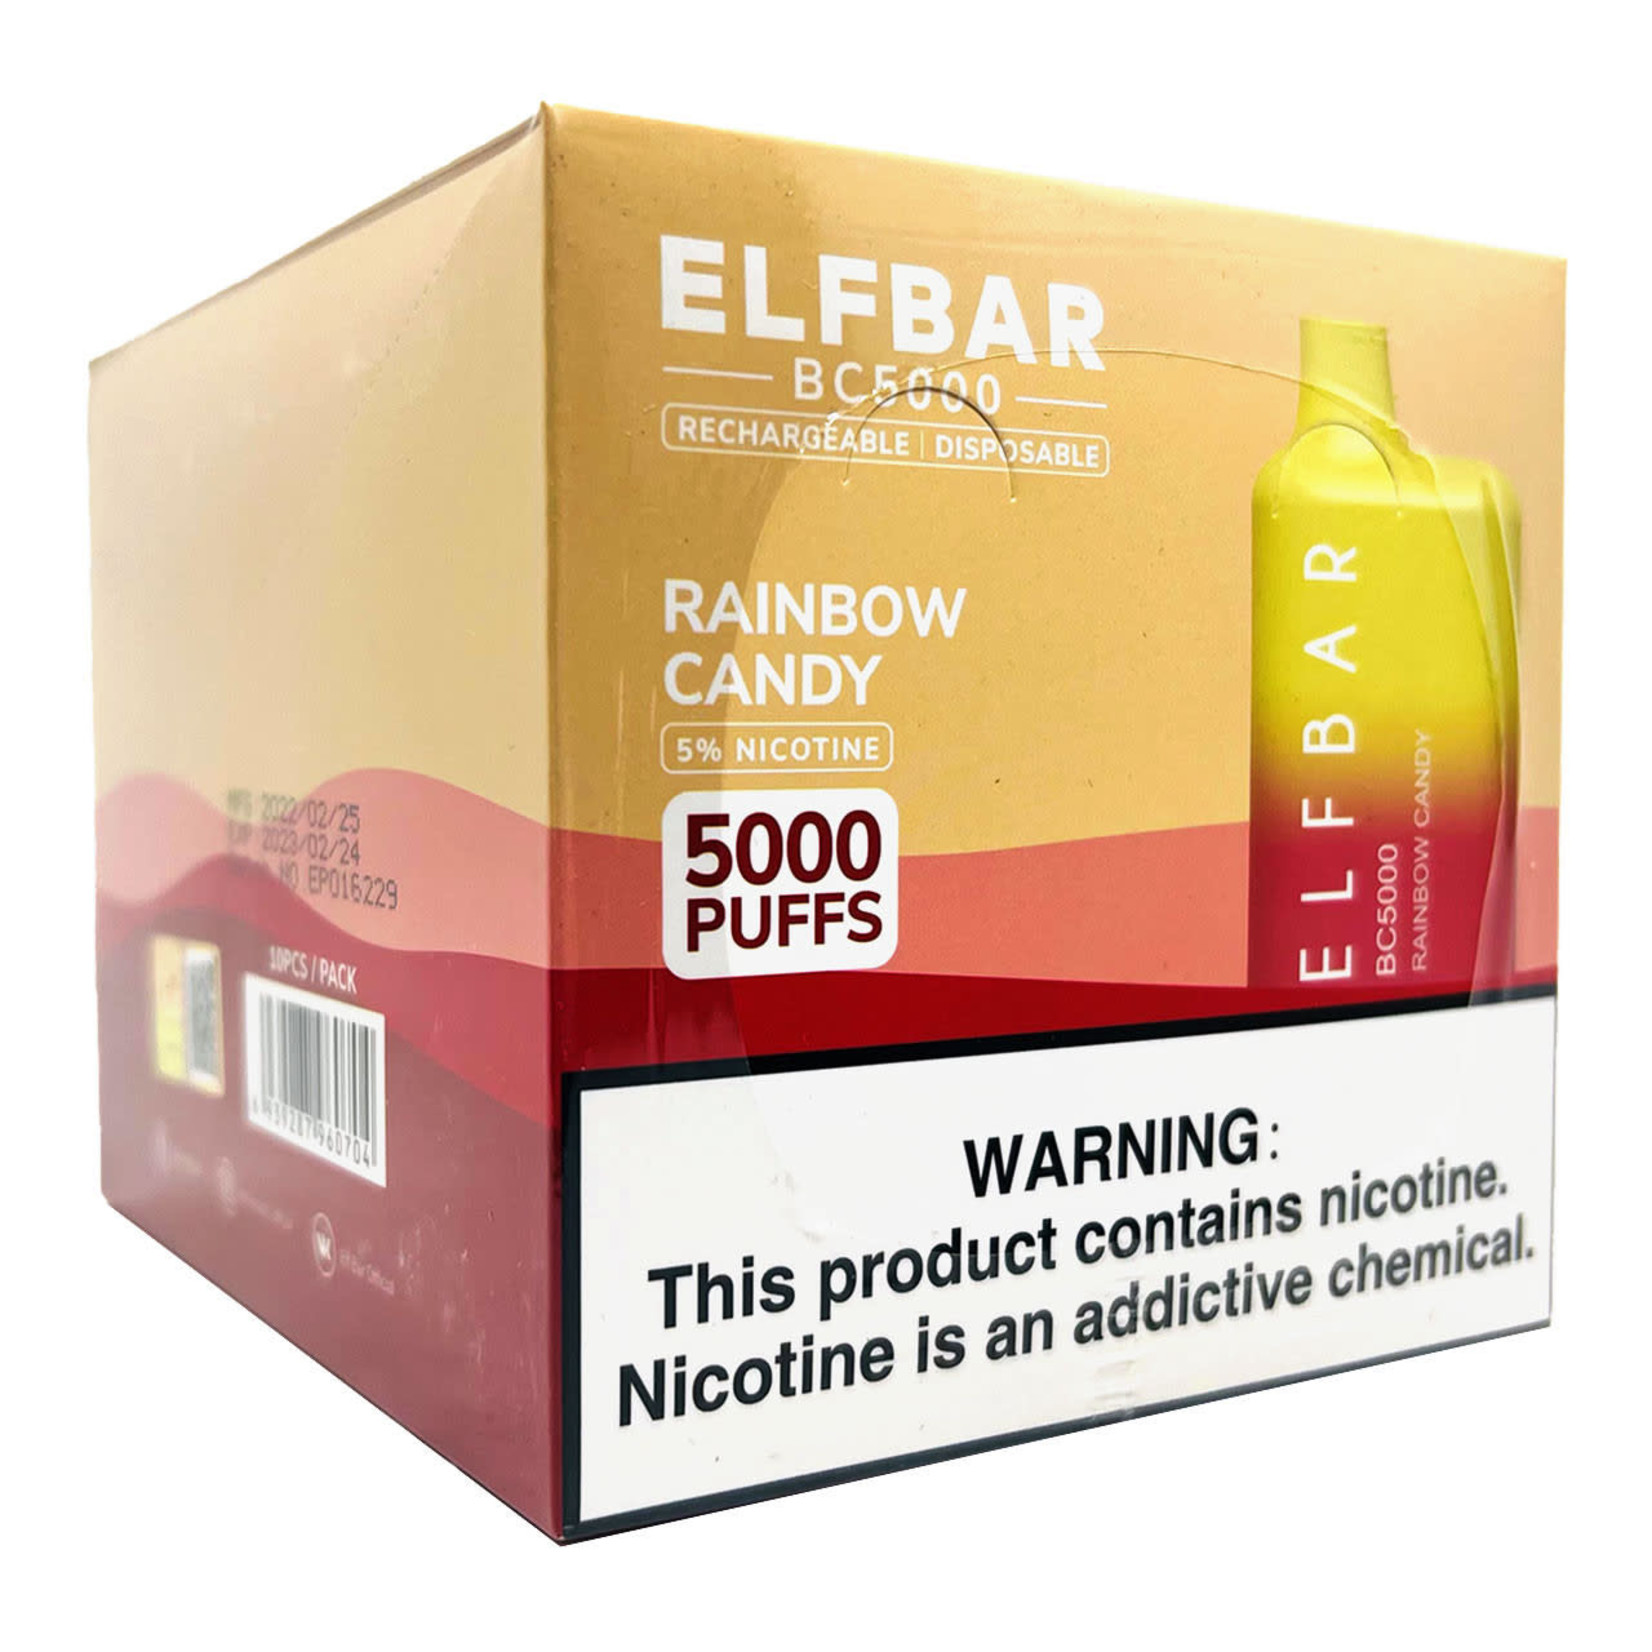 Elfbar ELFBAR BC5000 - Disposable 13ml 5%